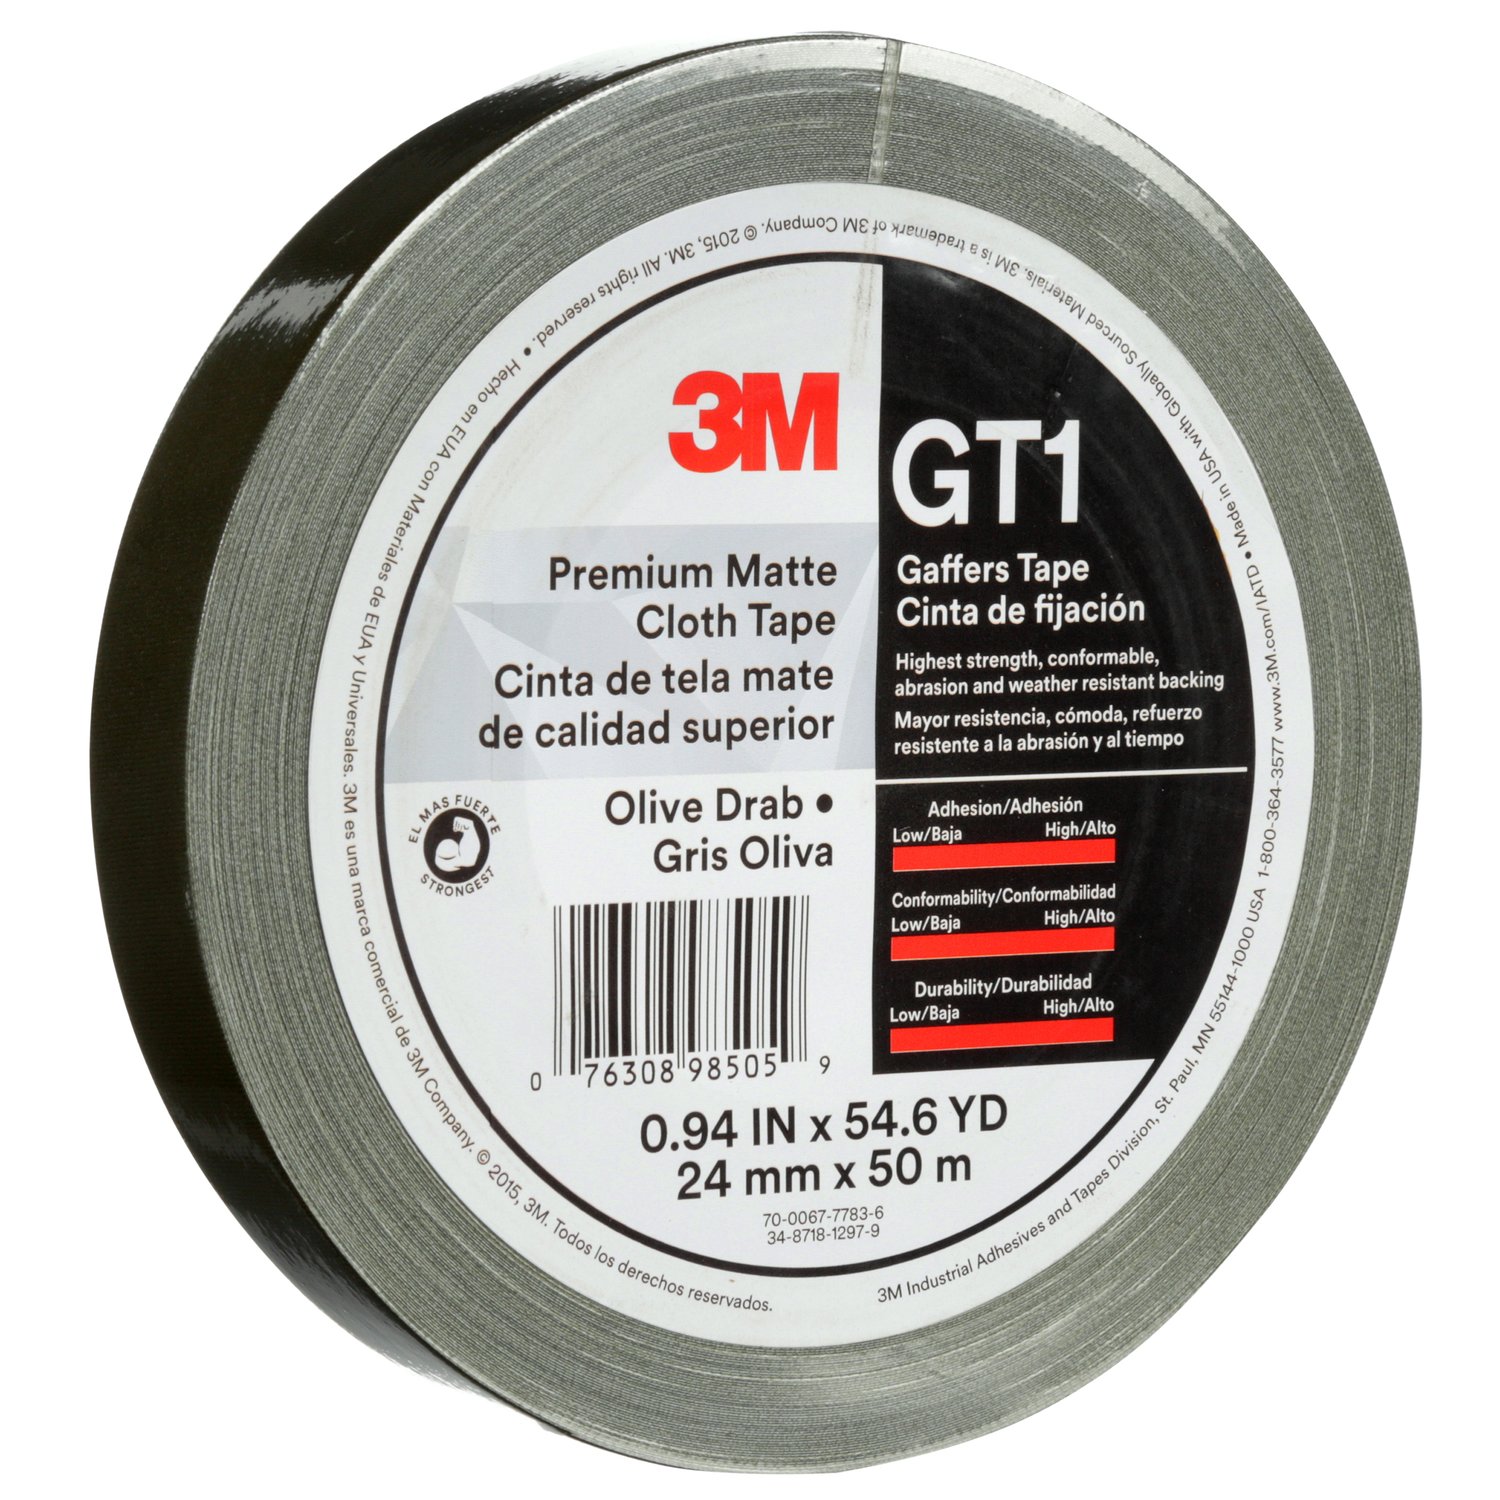 7100171413 - 3M Premium Matte Cloth (Gaffers) Tape GT1, Olive Drab, 24 mm x 50 m, 11
mil, 48/Case